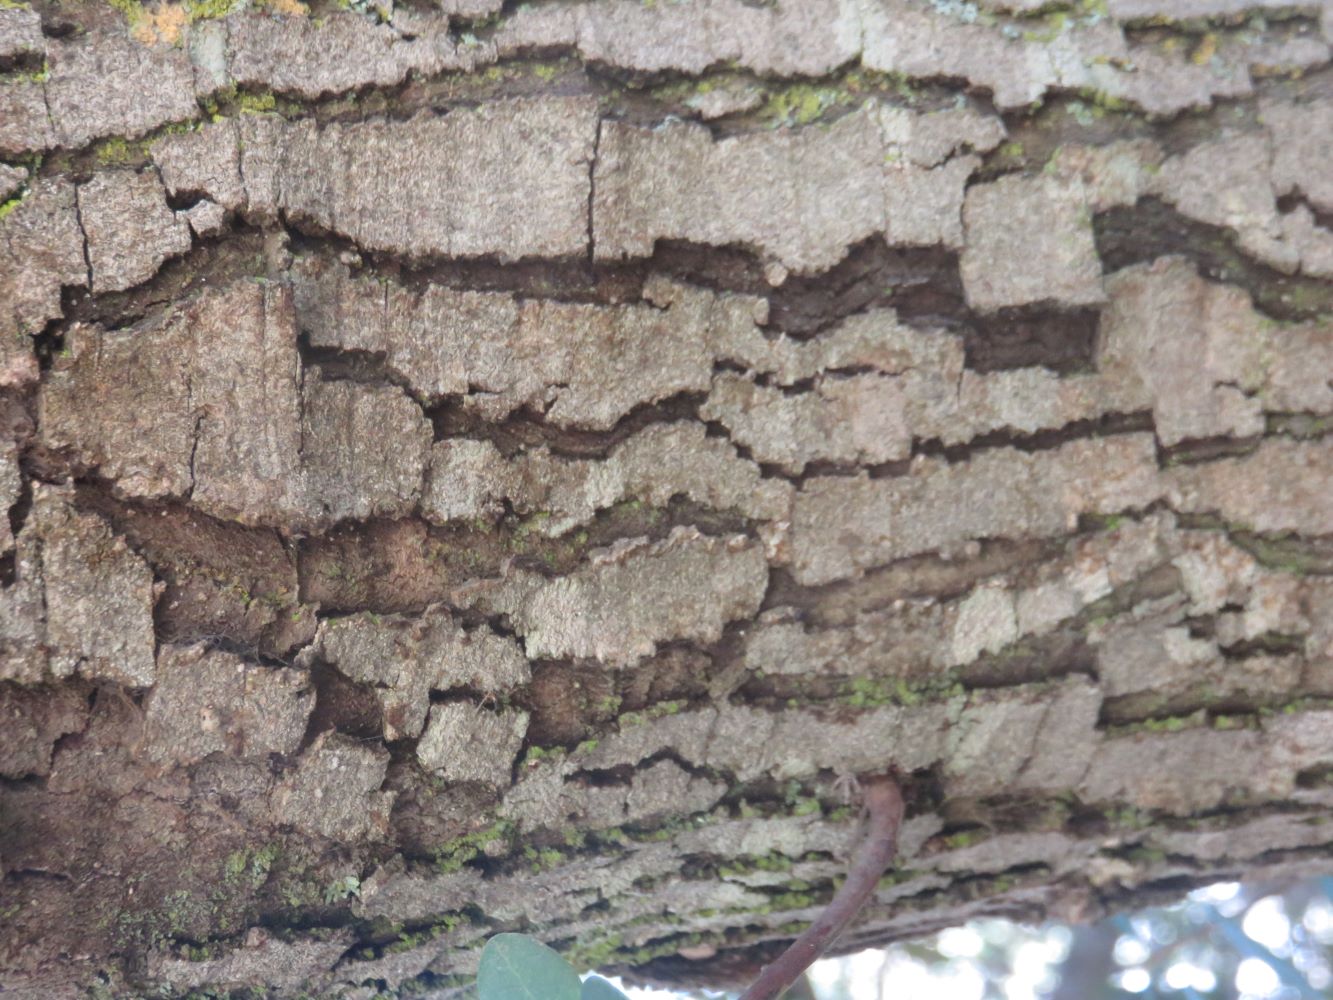 Euclea racemosa bark on an old tree.